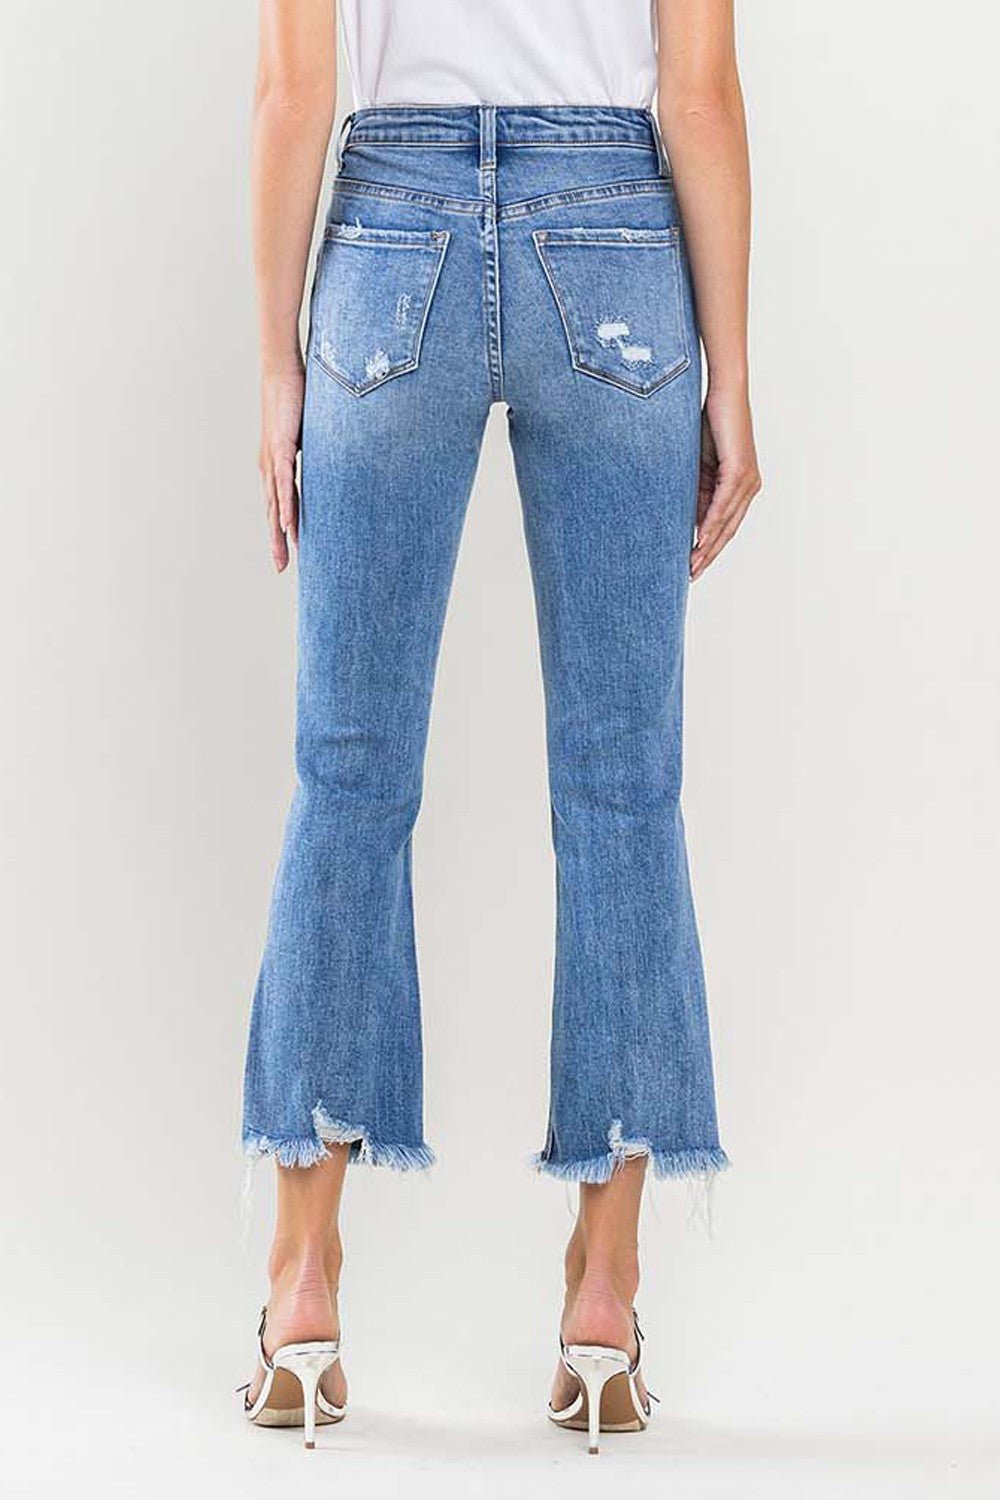 Medium Wash High Rise Cropped Flare JeansJeansVervet by Flying Monkey